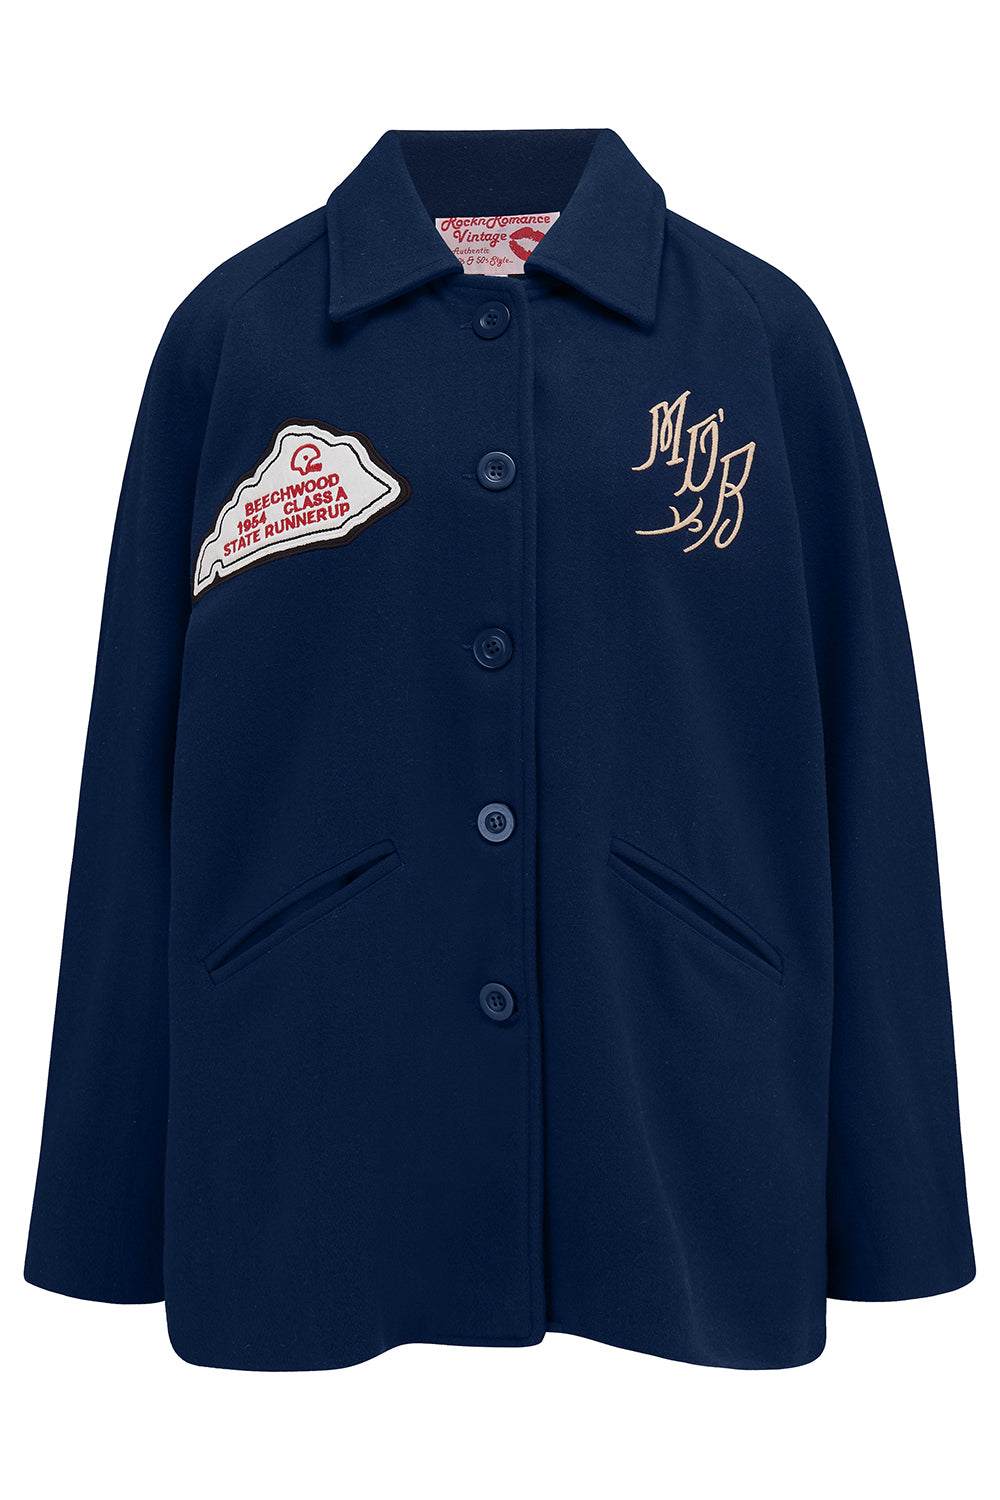 The "1954 Mob Jacket" in Classic Blue, 100% Wool, Authentic Vintage Style - CC41, Goodwood Revival, Twinwood Festival, Viva Las Vegas Rockabilly Weekend Rock n Romance Rock n Romance